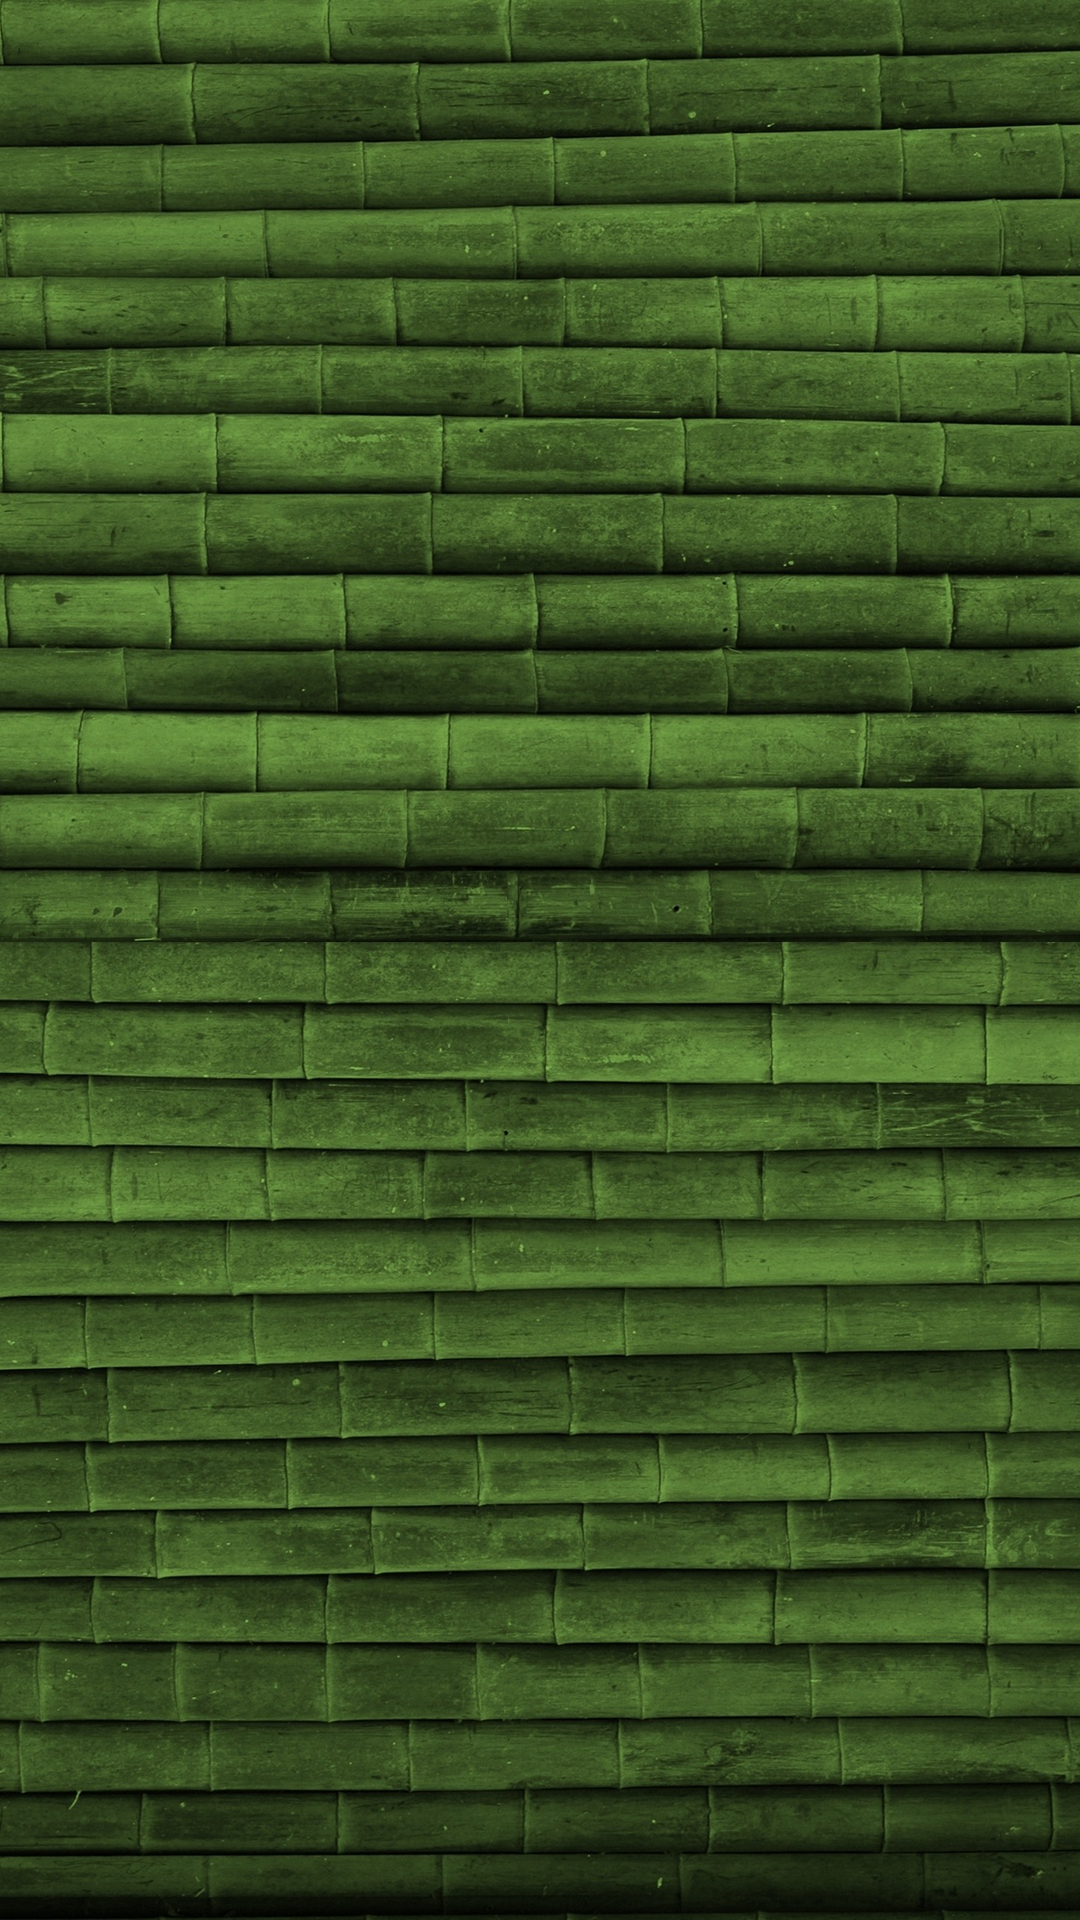 Galaxy s4 wallpaper with green bamboo horizontal design 1080x1920